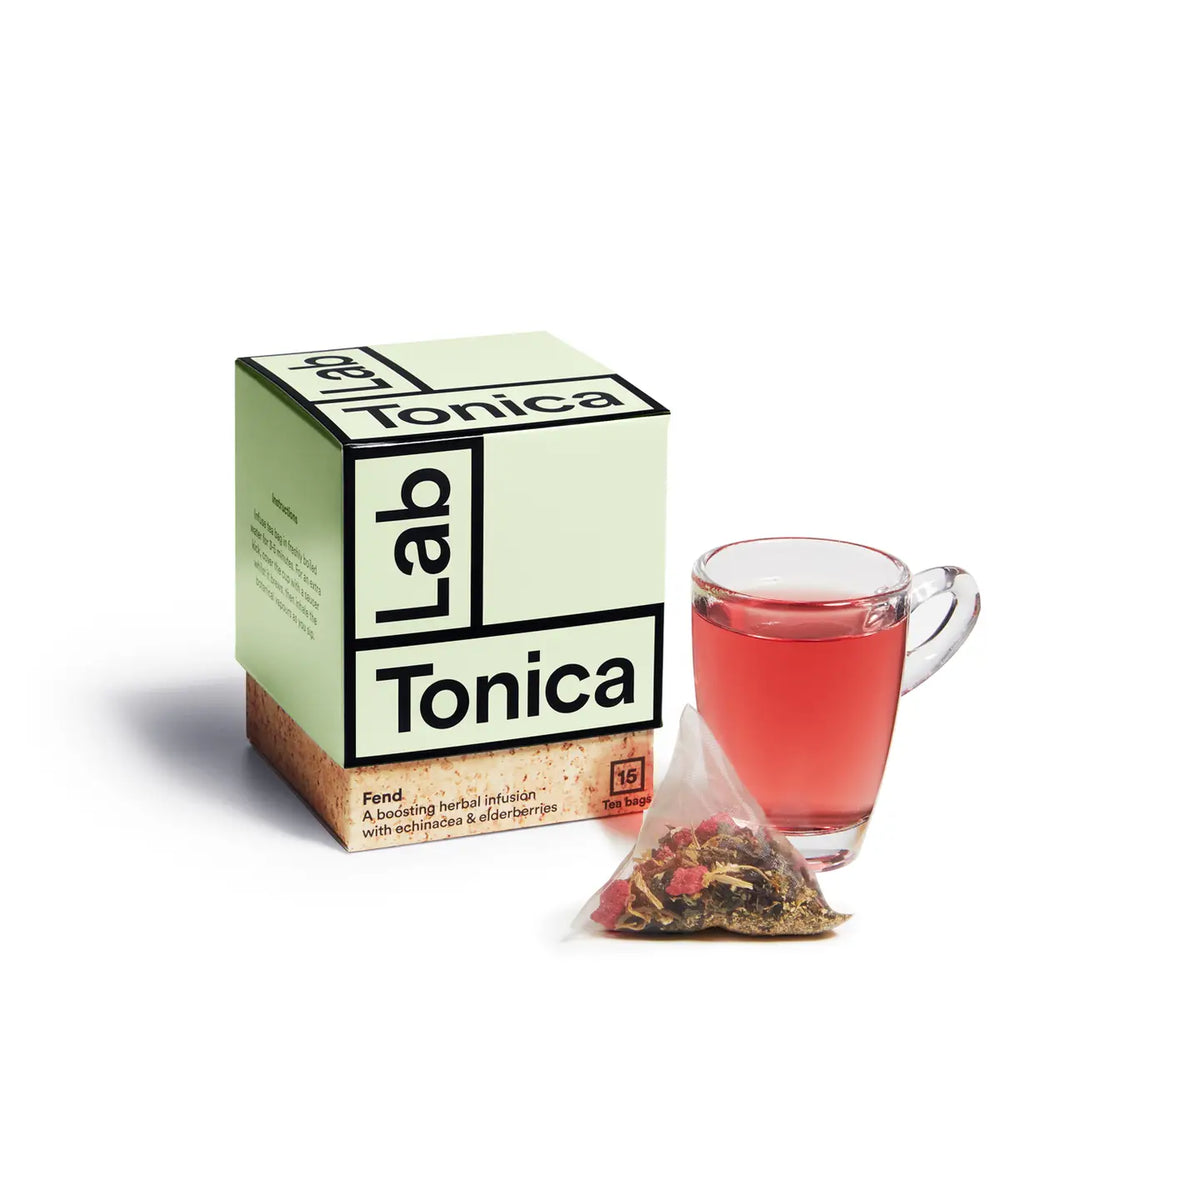 Optional Fend Herbal Tea